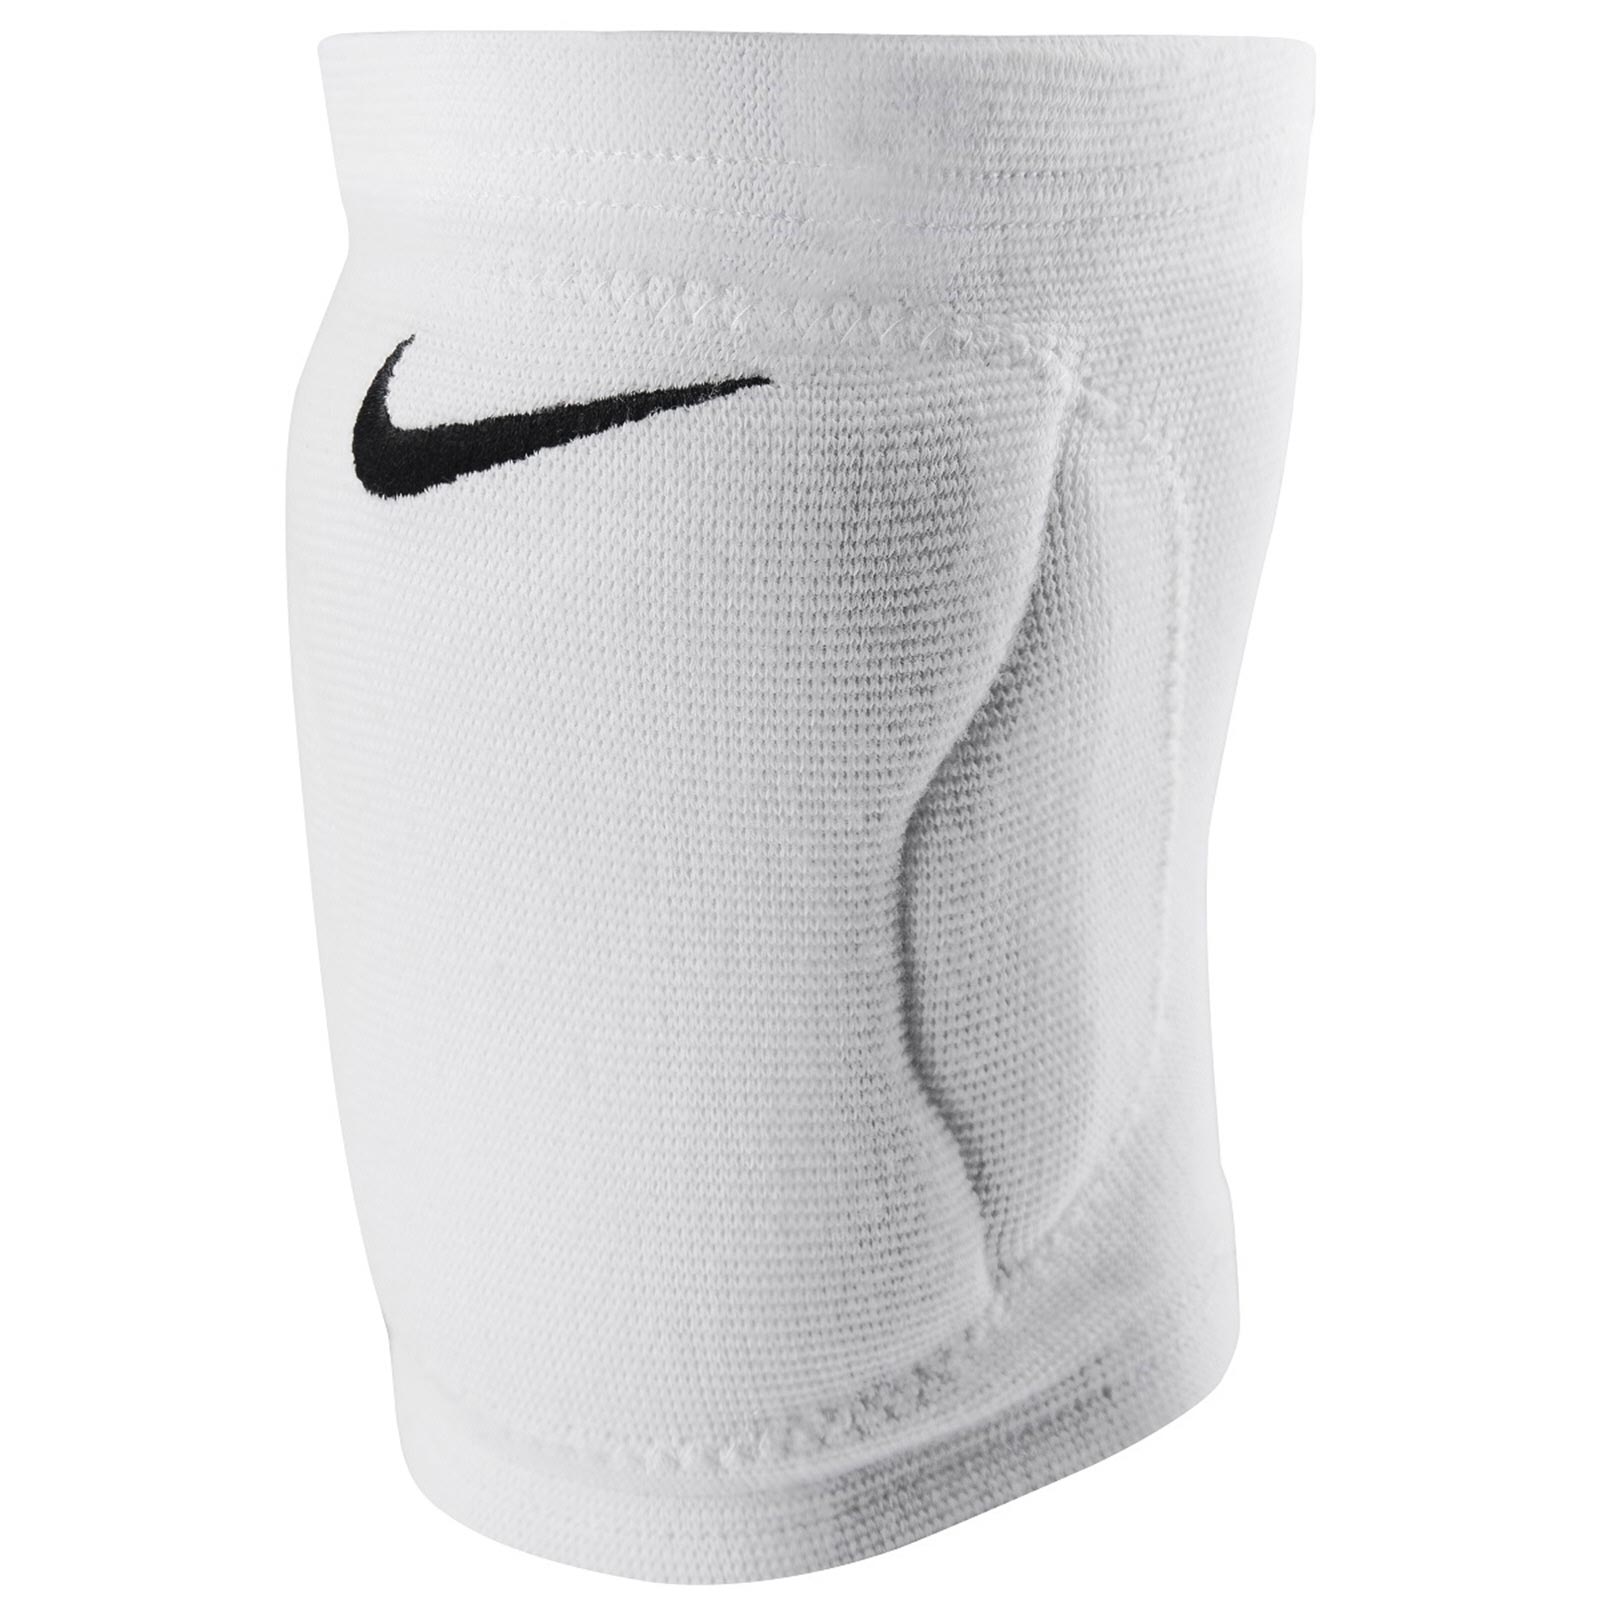 Nike Streak Volleyball Knee Pads Wht/Blk